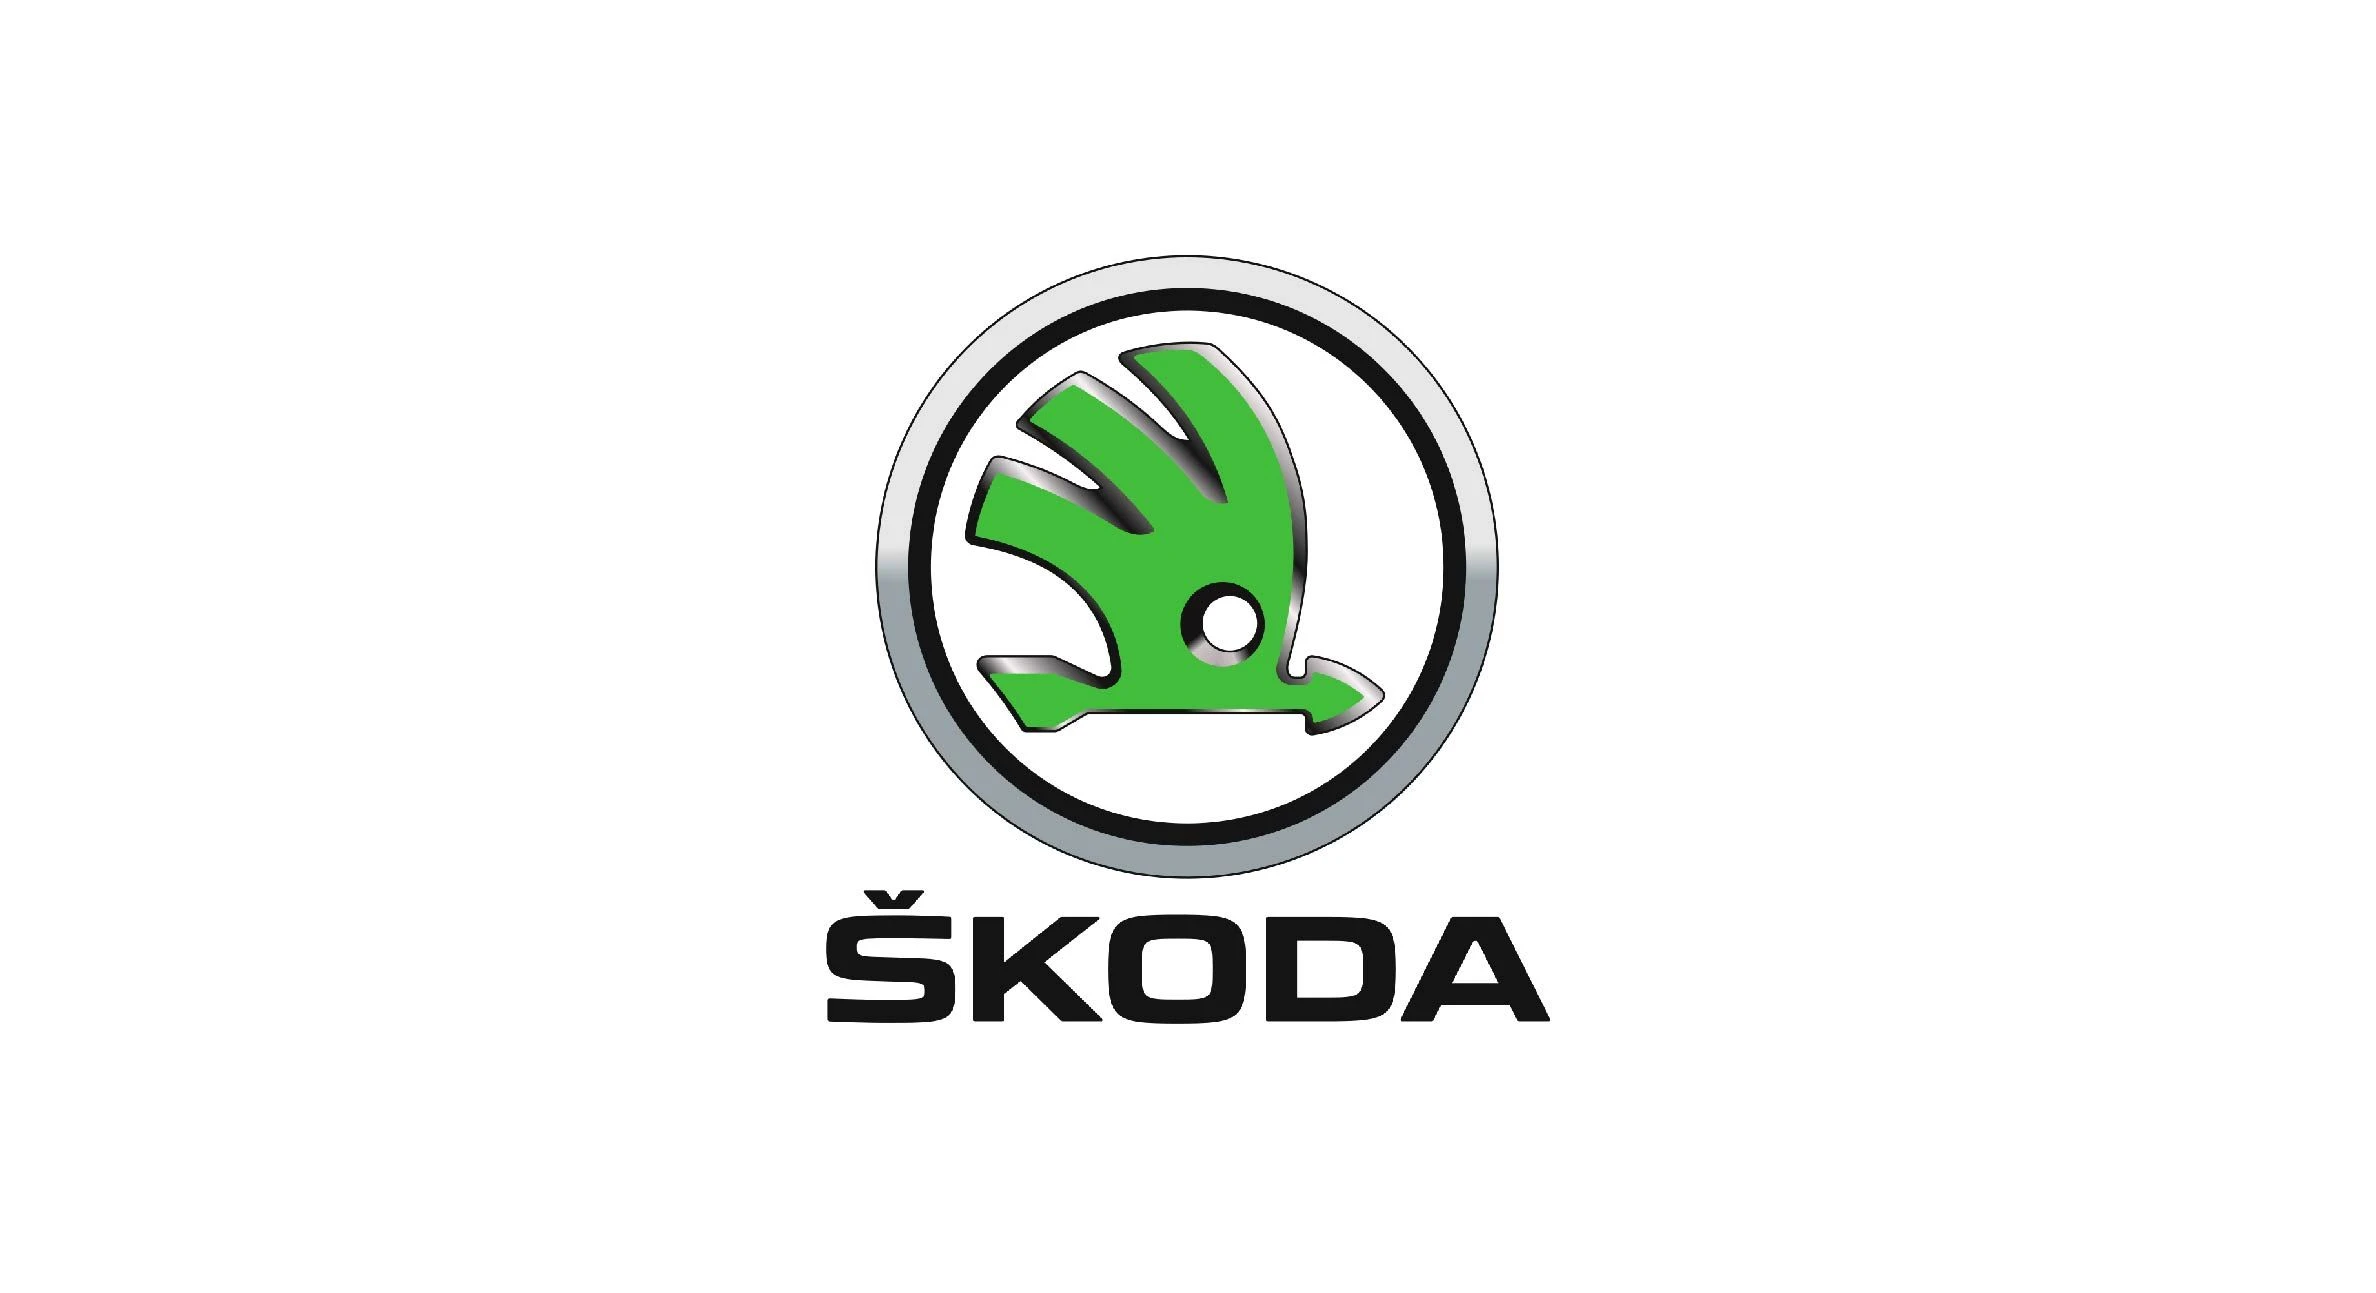 Skoda car brand logo